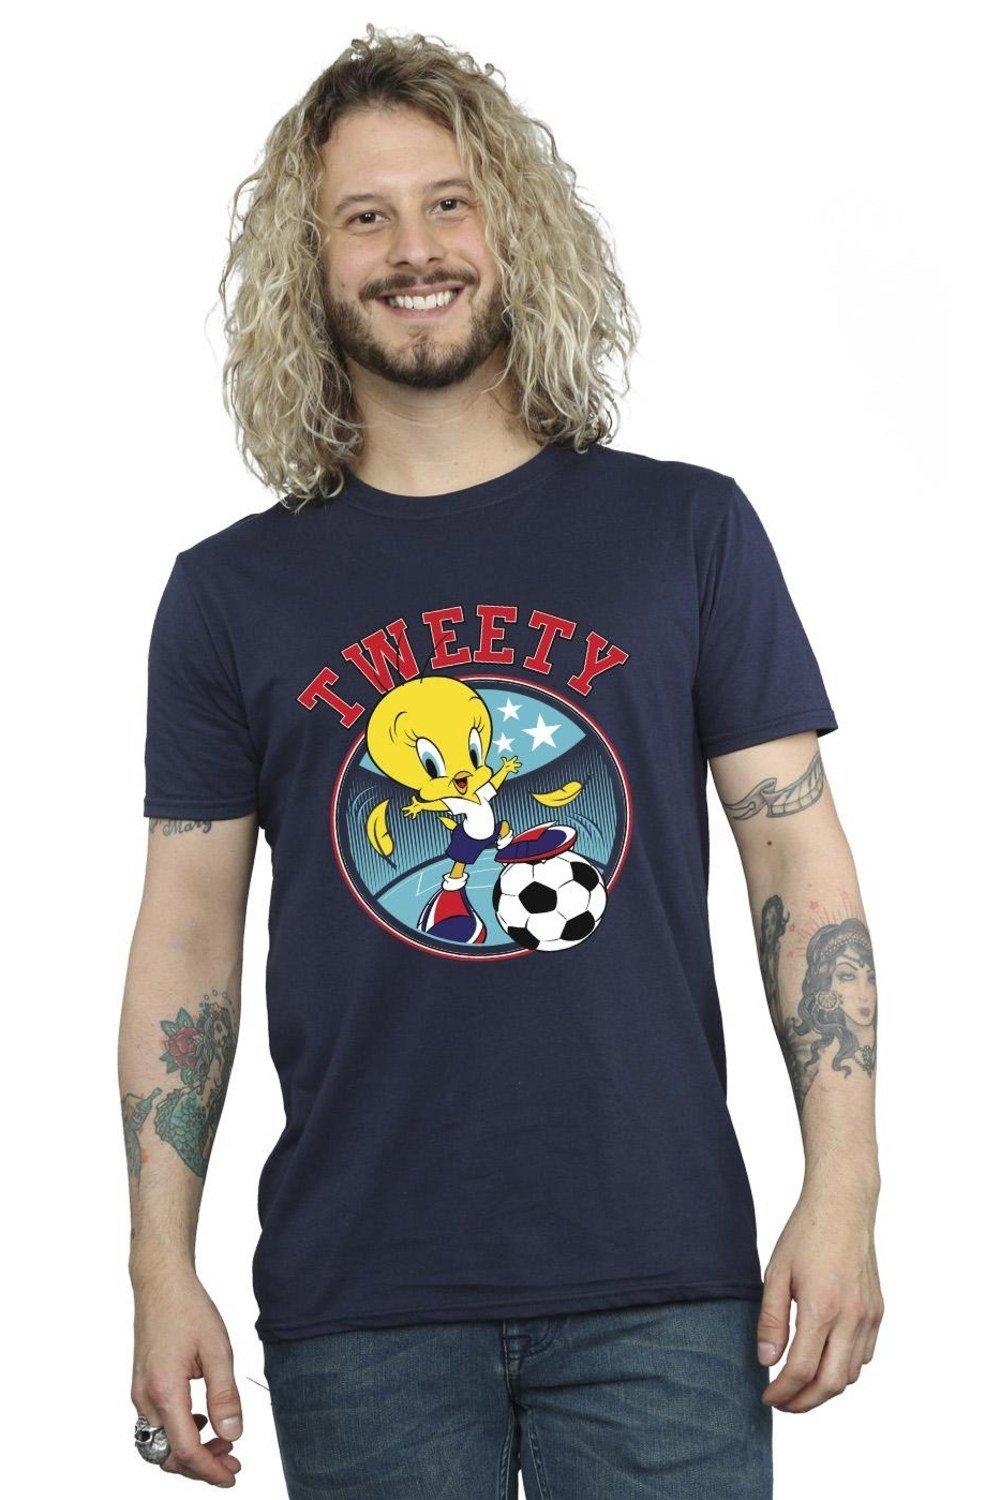 tweety football circle t-shirt